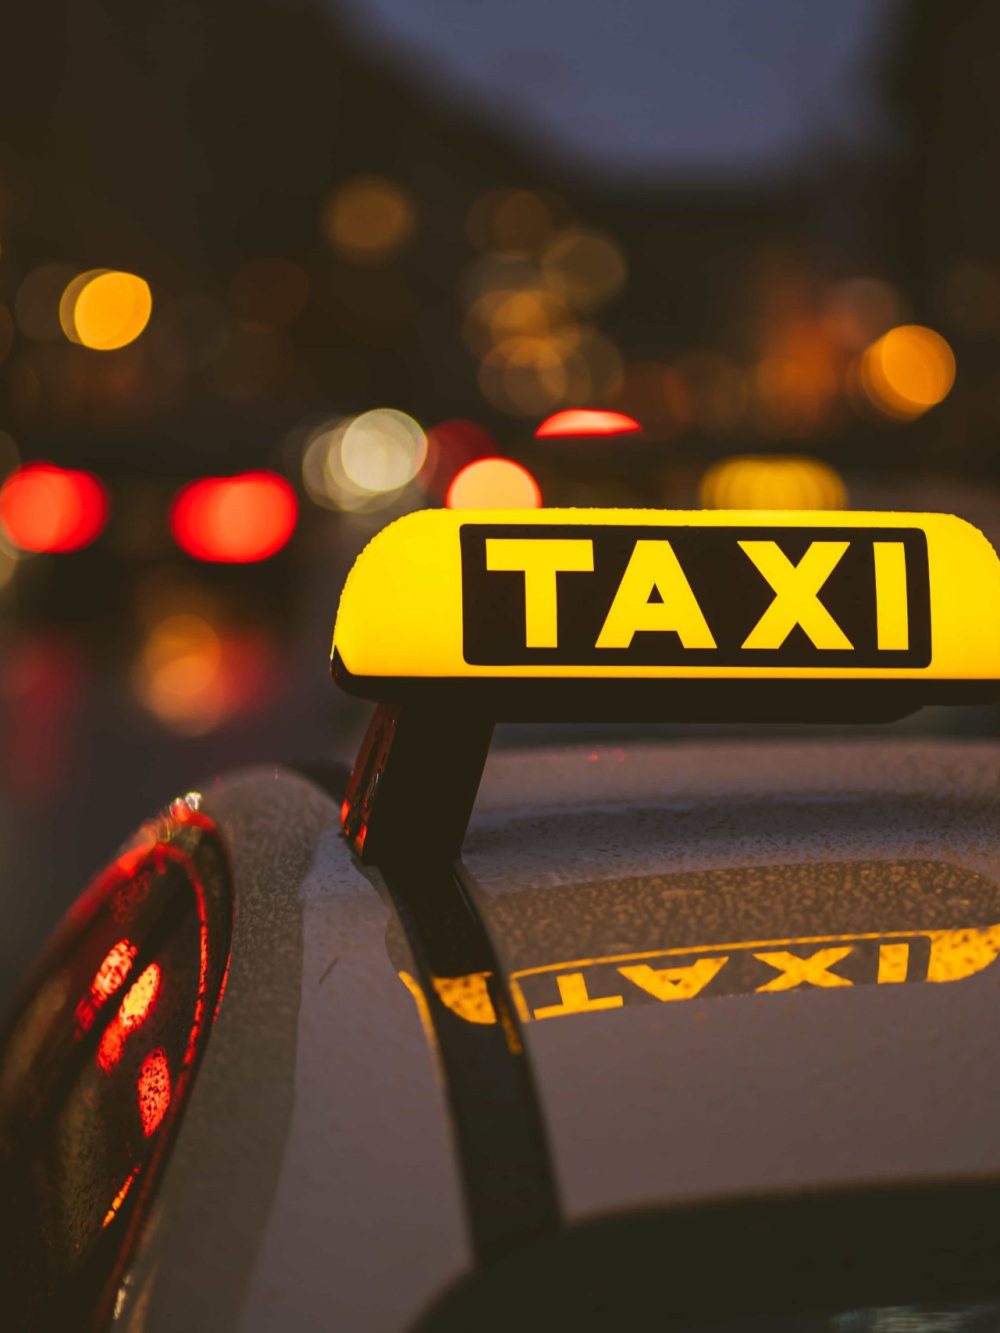 Taxi Latino Carxi taxi-sign-on-car-during-night